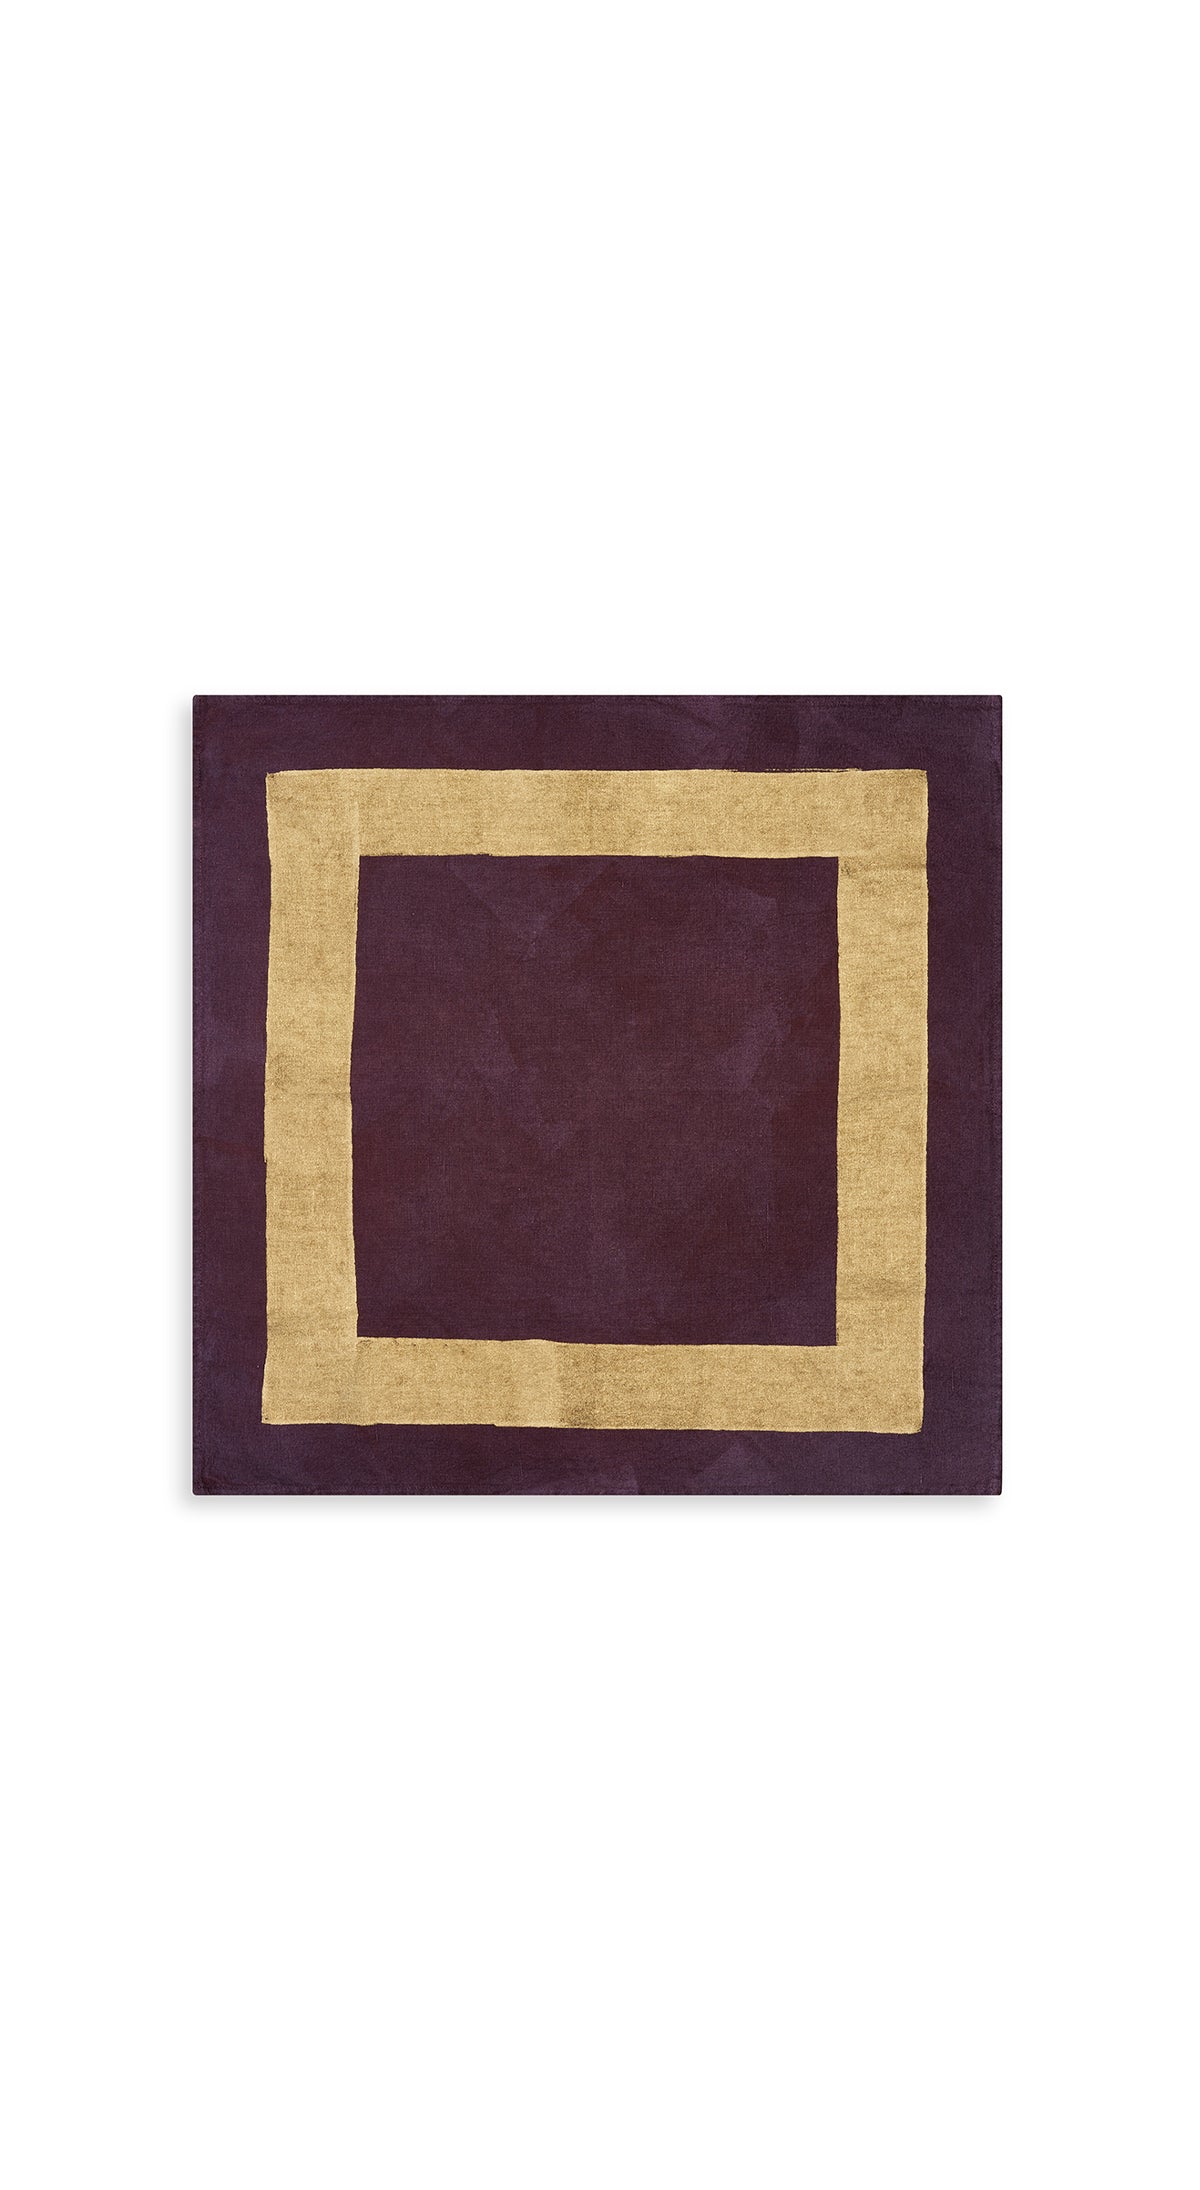 Full Field Cornice Linen Napkin in Grape Purple & Gold, 50x50cm